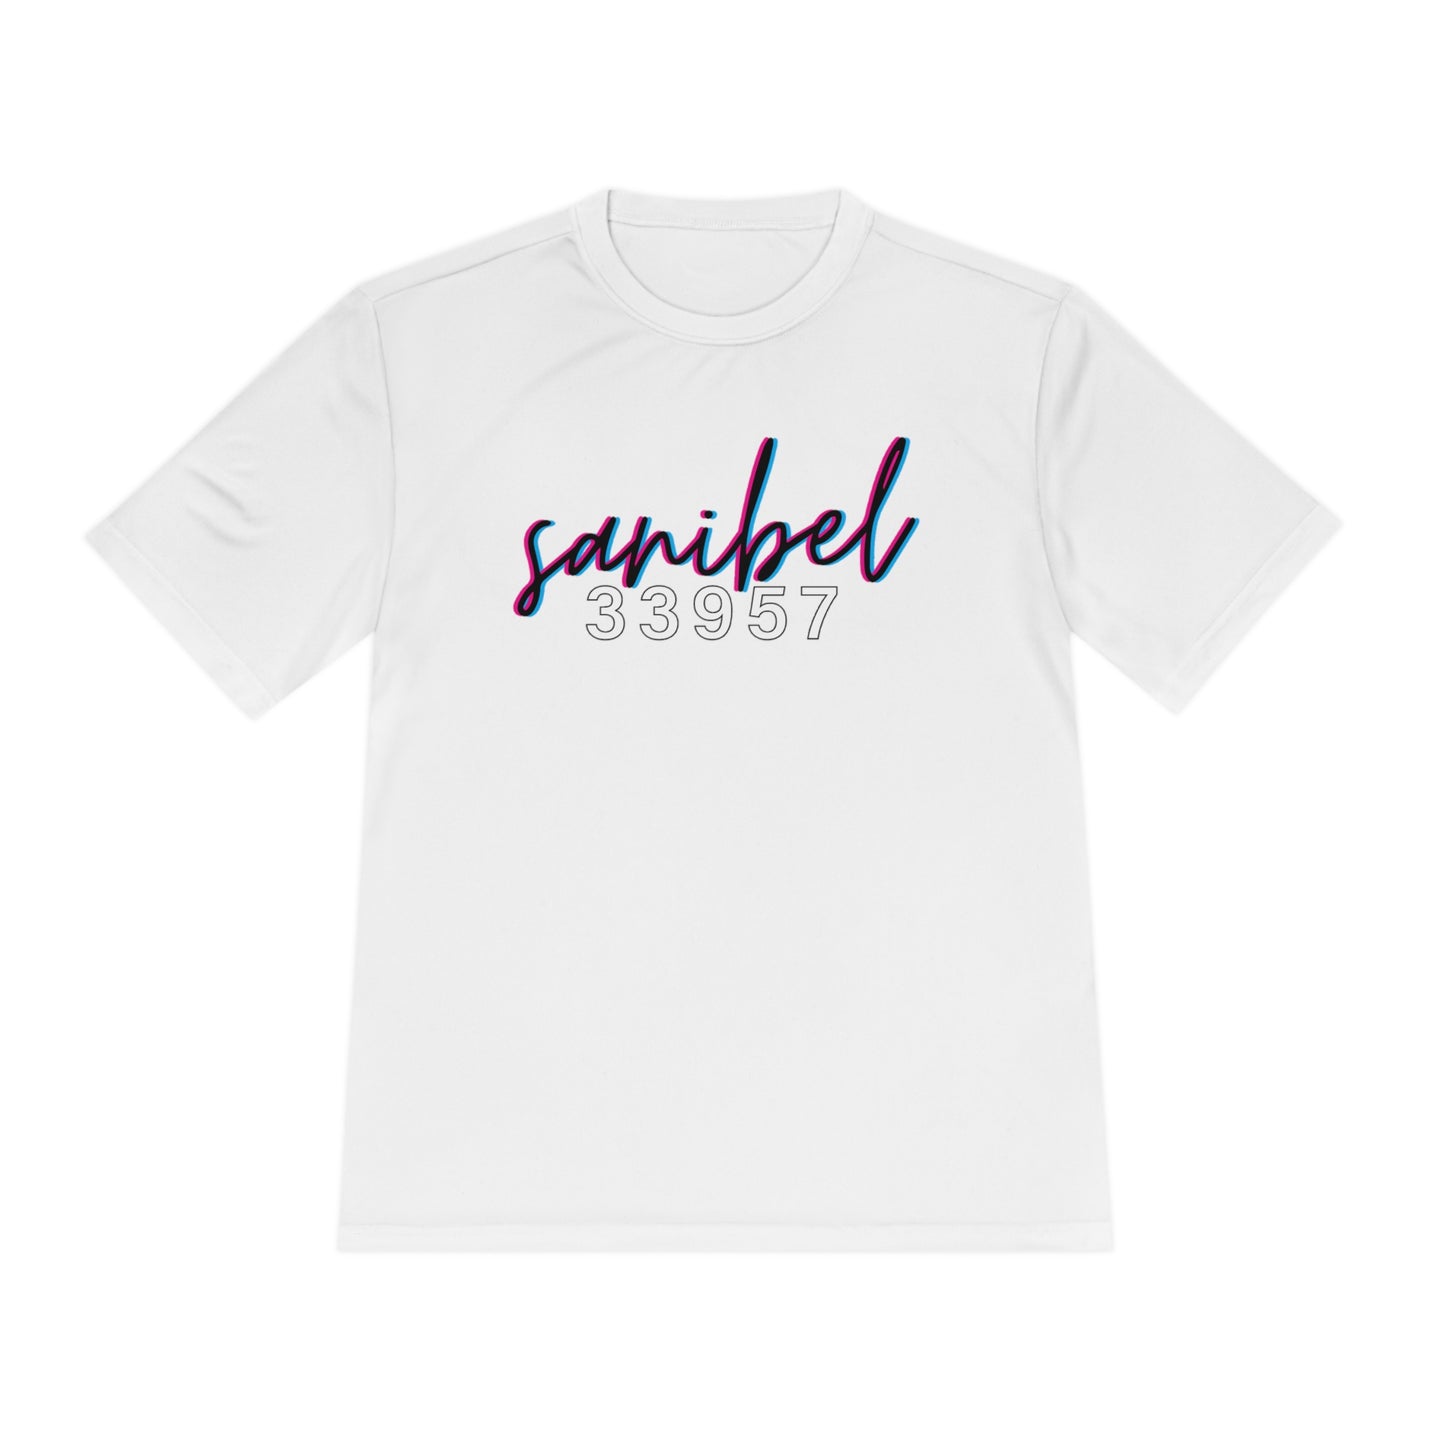 Sanibel 33957 Unisex Moisture Wicking Tee + More Colors